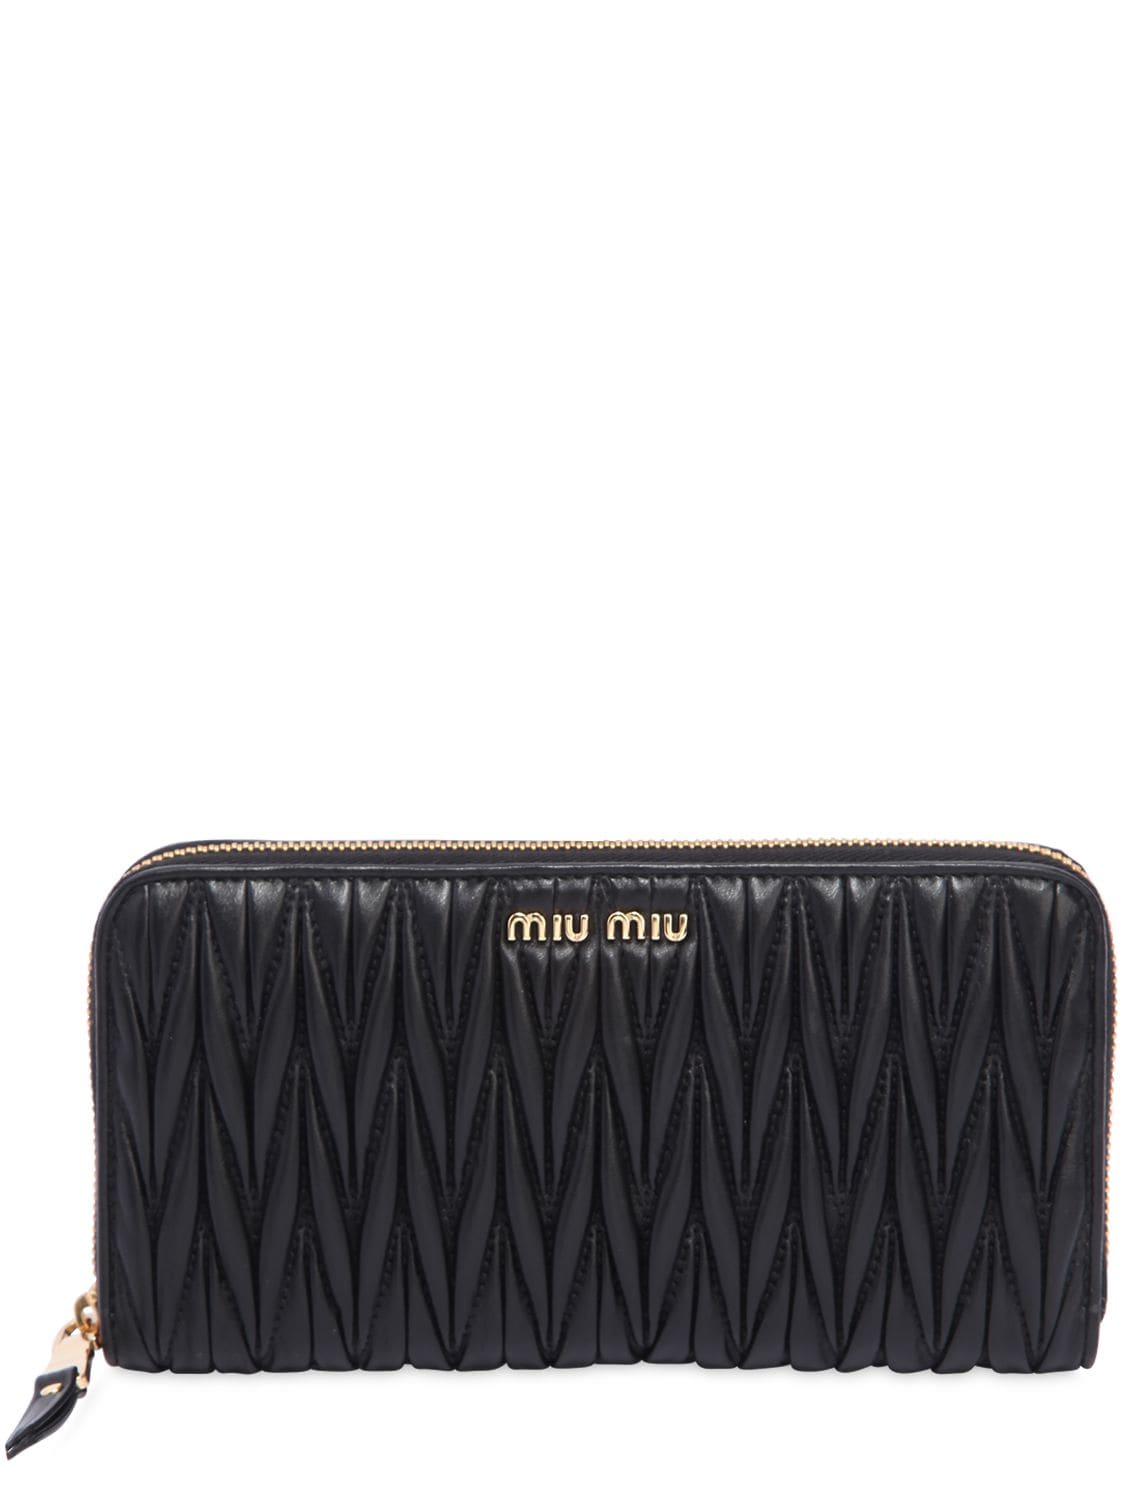 Miu Miu Quilted Leather Zip Around Wallet In Black